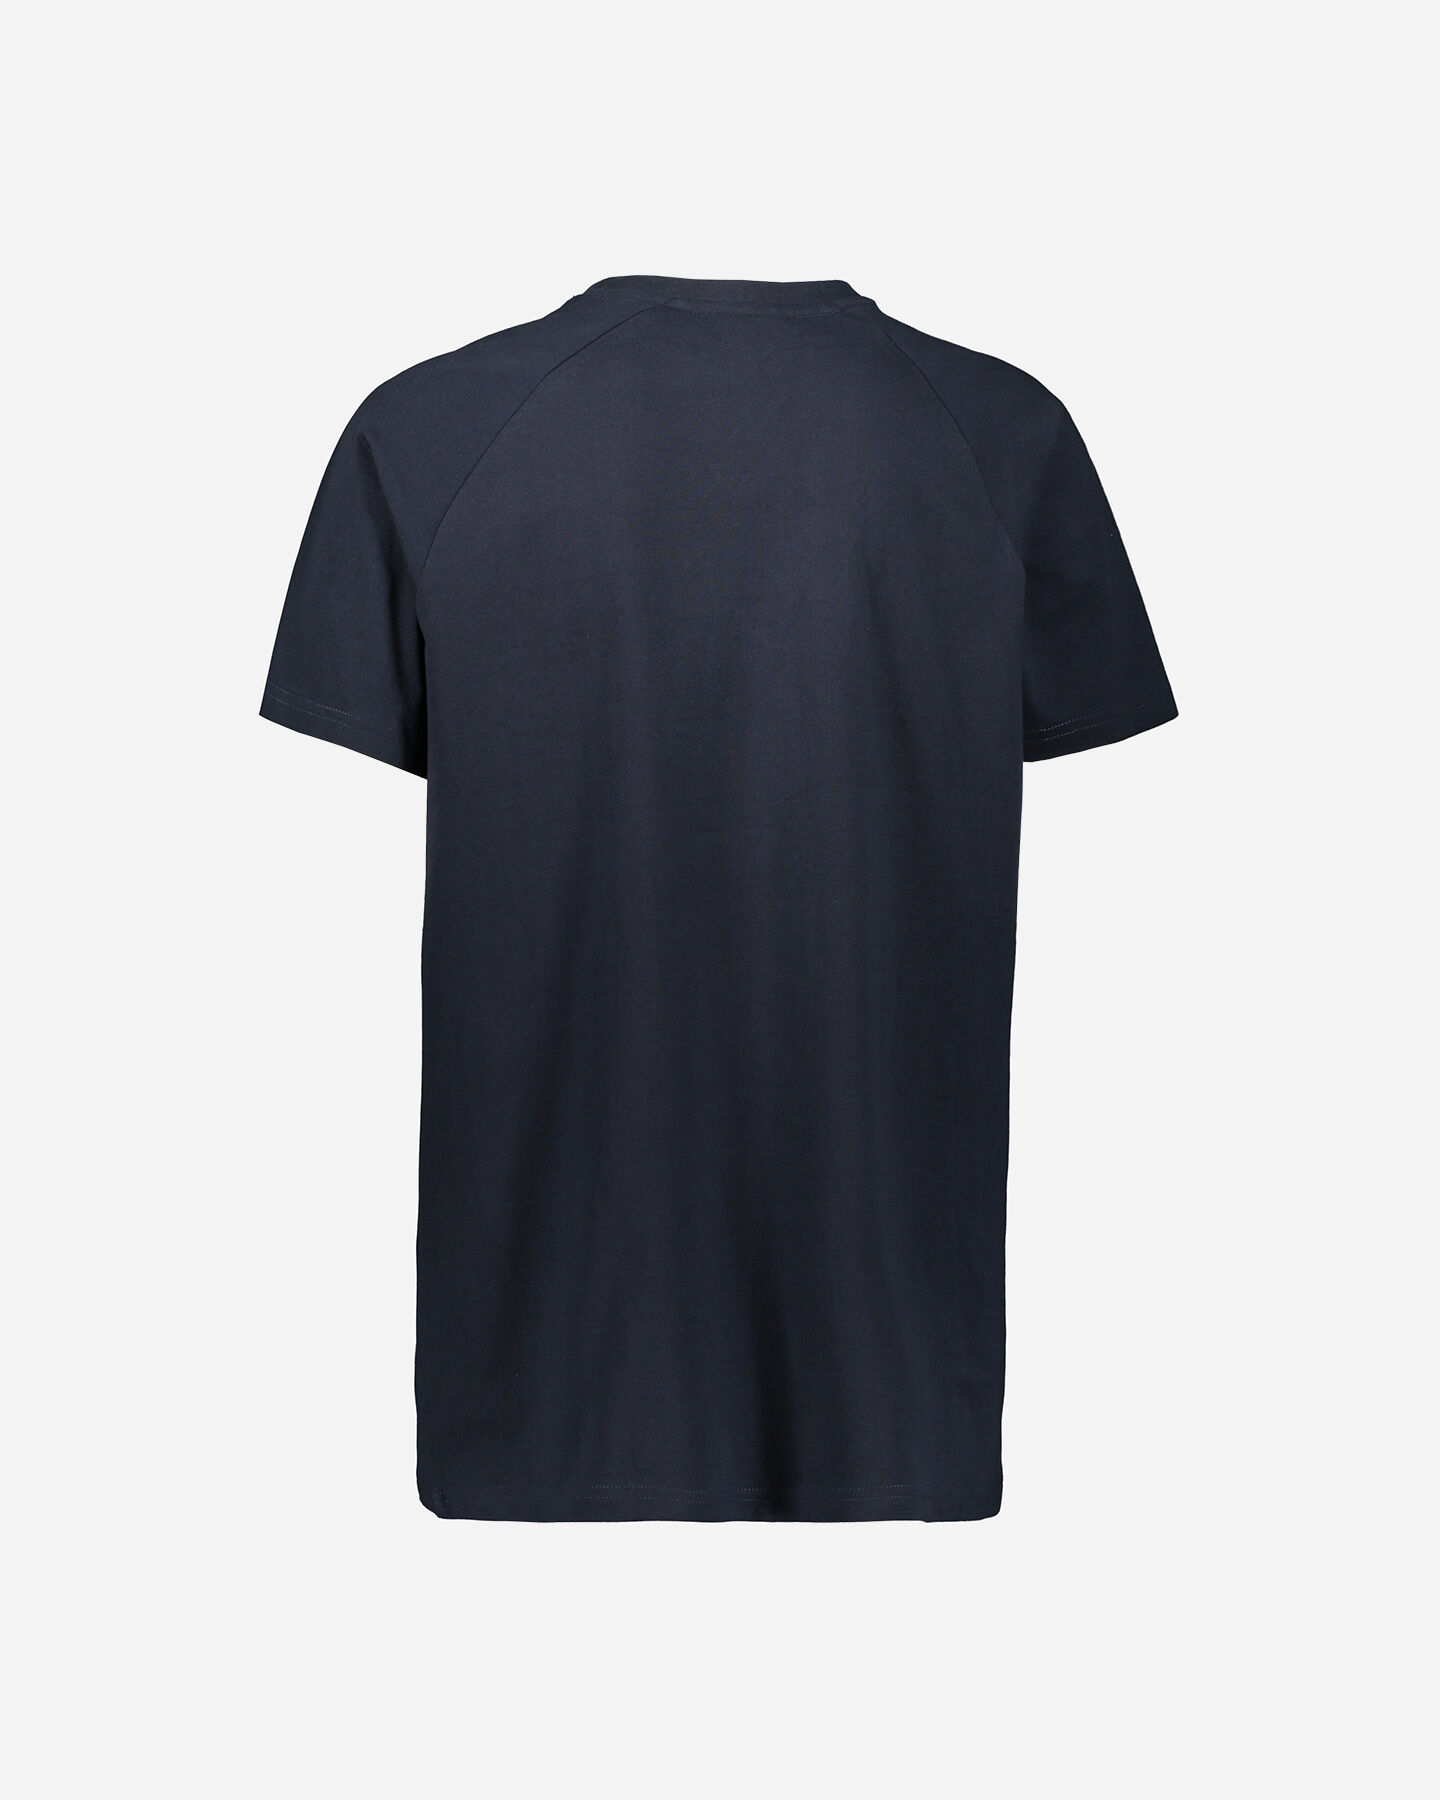  T-Shirt BEAR MC LOGO M S4085652|800|S scatto 1